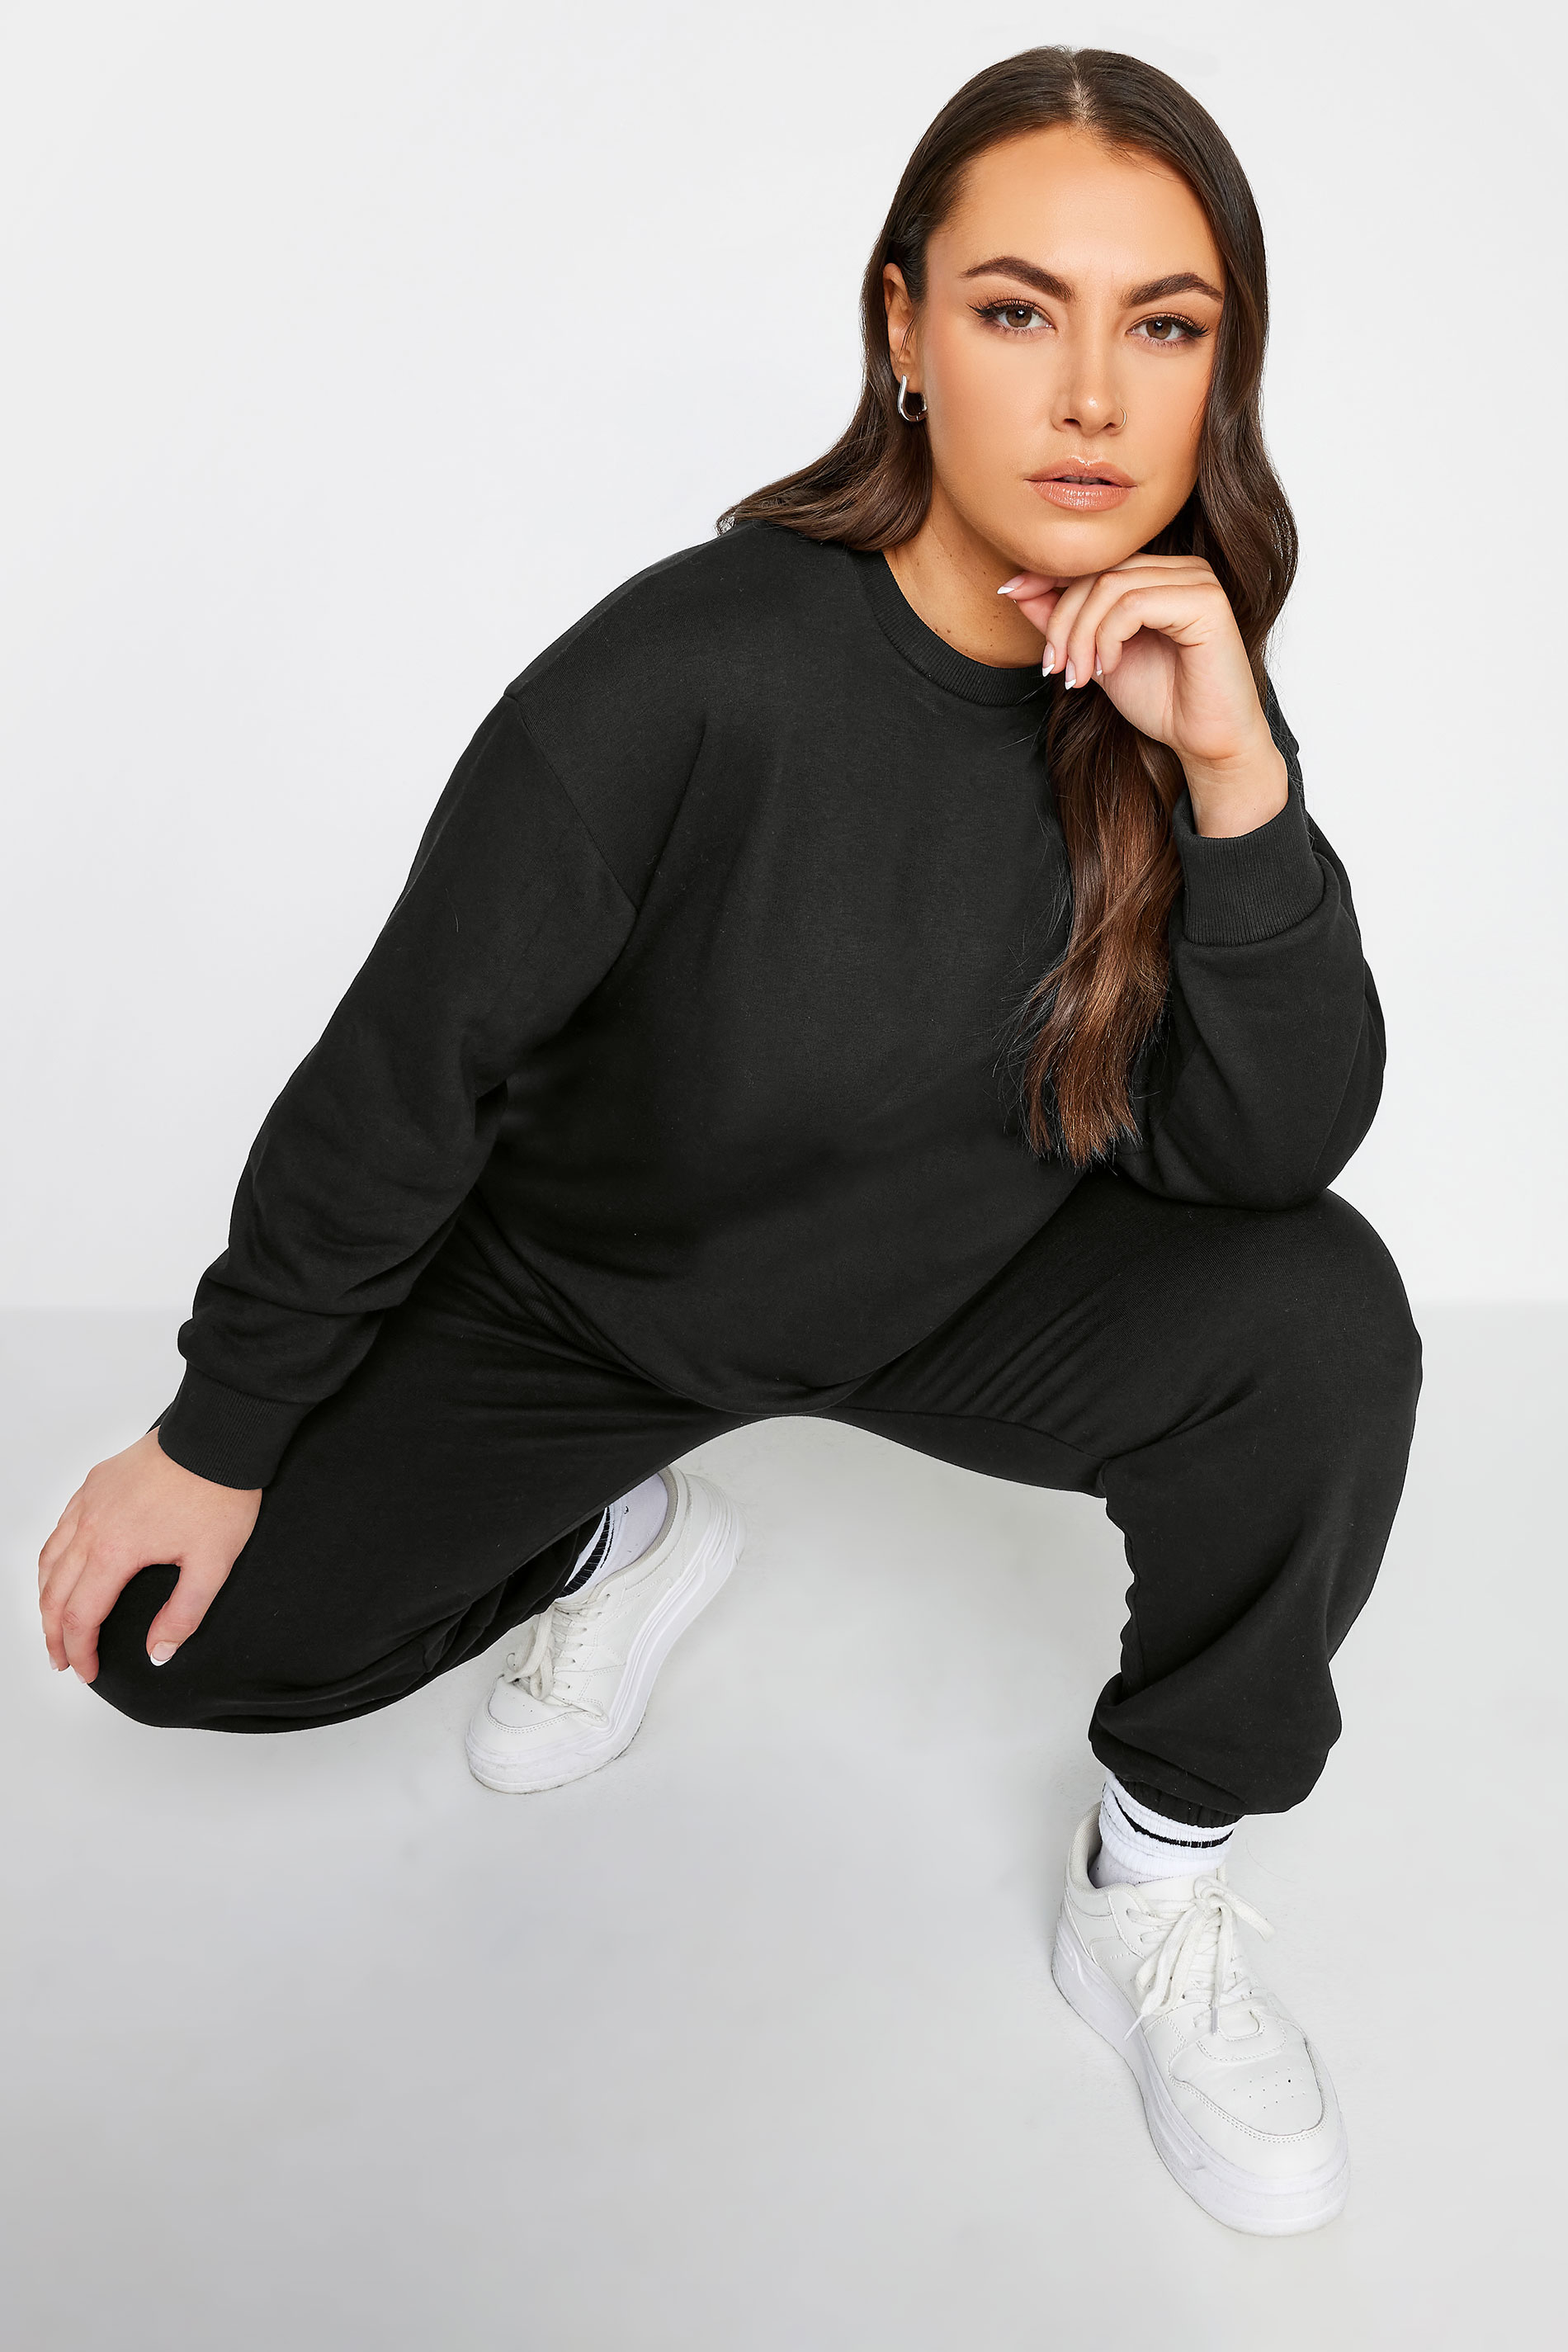 YOURS Plus Size Black Crew Neck Sweatshirt | Yours Clothing 1